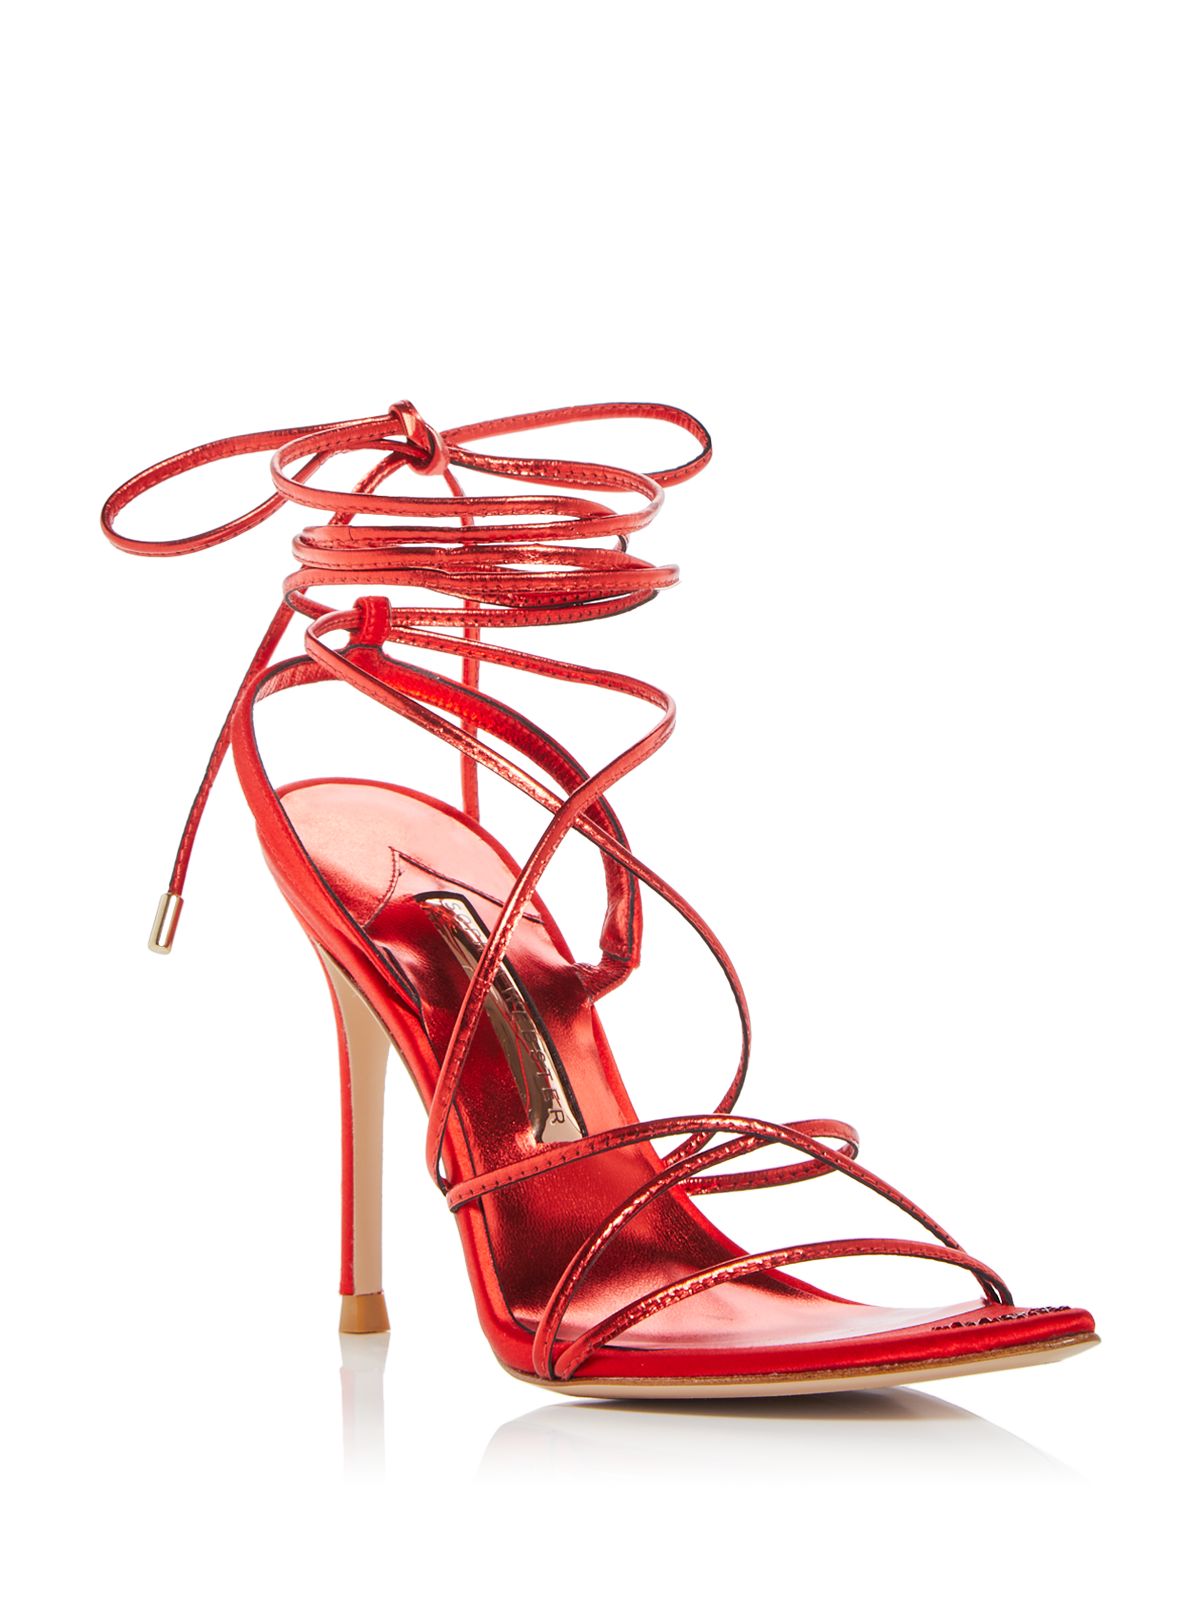 SOPHIA WEBSTER Womens Red Comfort Amora Open Toe Stiletto Lace-Up Leather Dress Heeled Sandal 37